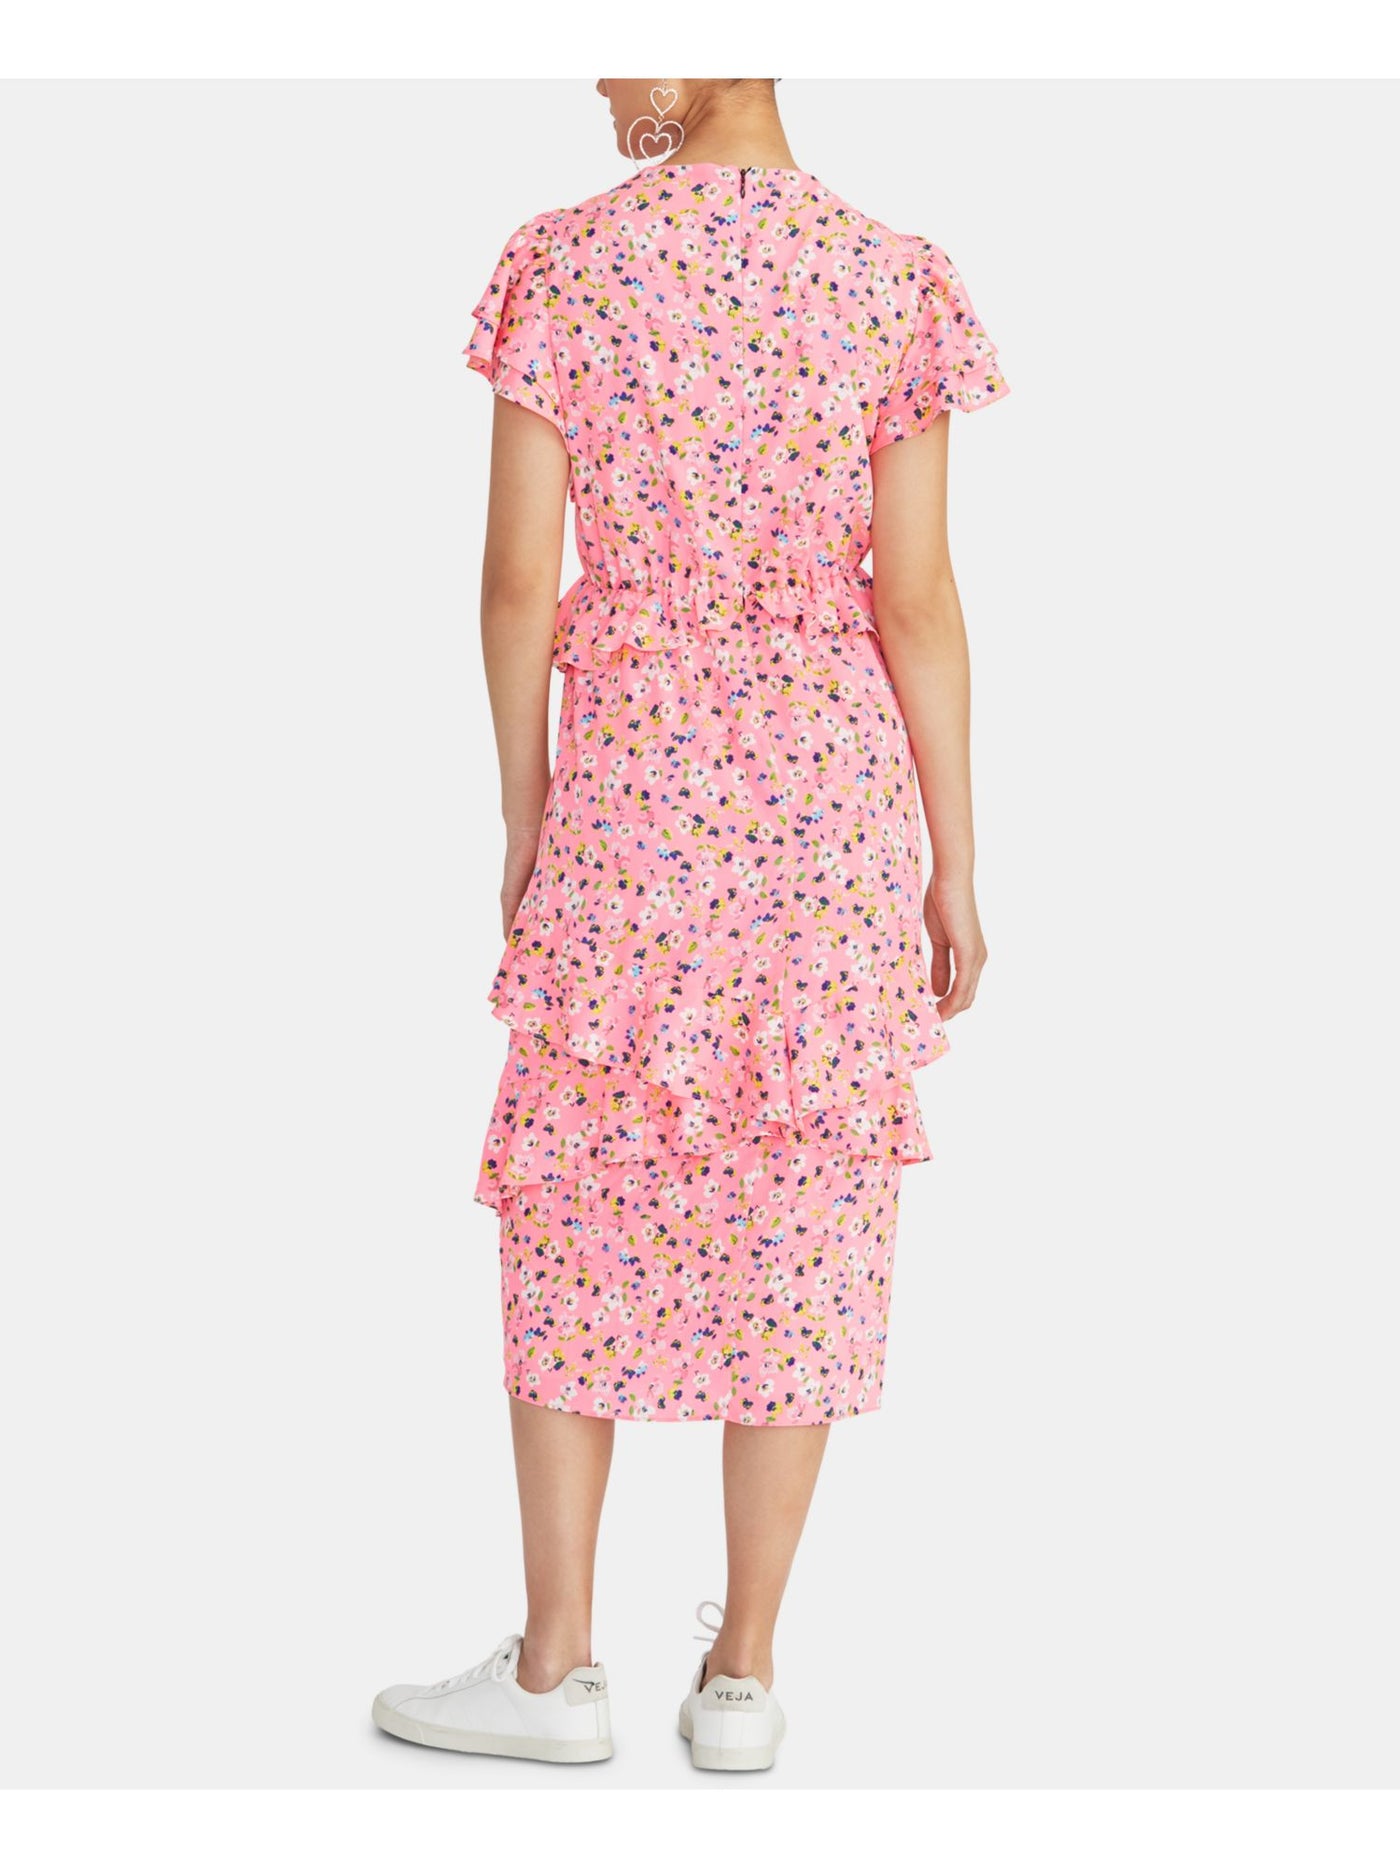 RACHEL ROY Womens Pink Ruffled Floral Short Sleeve V Neck Tea-Length Sheath Dress 4